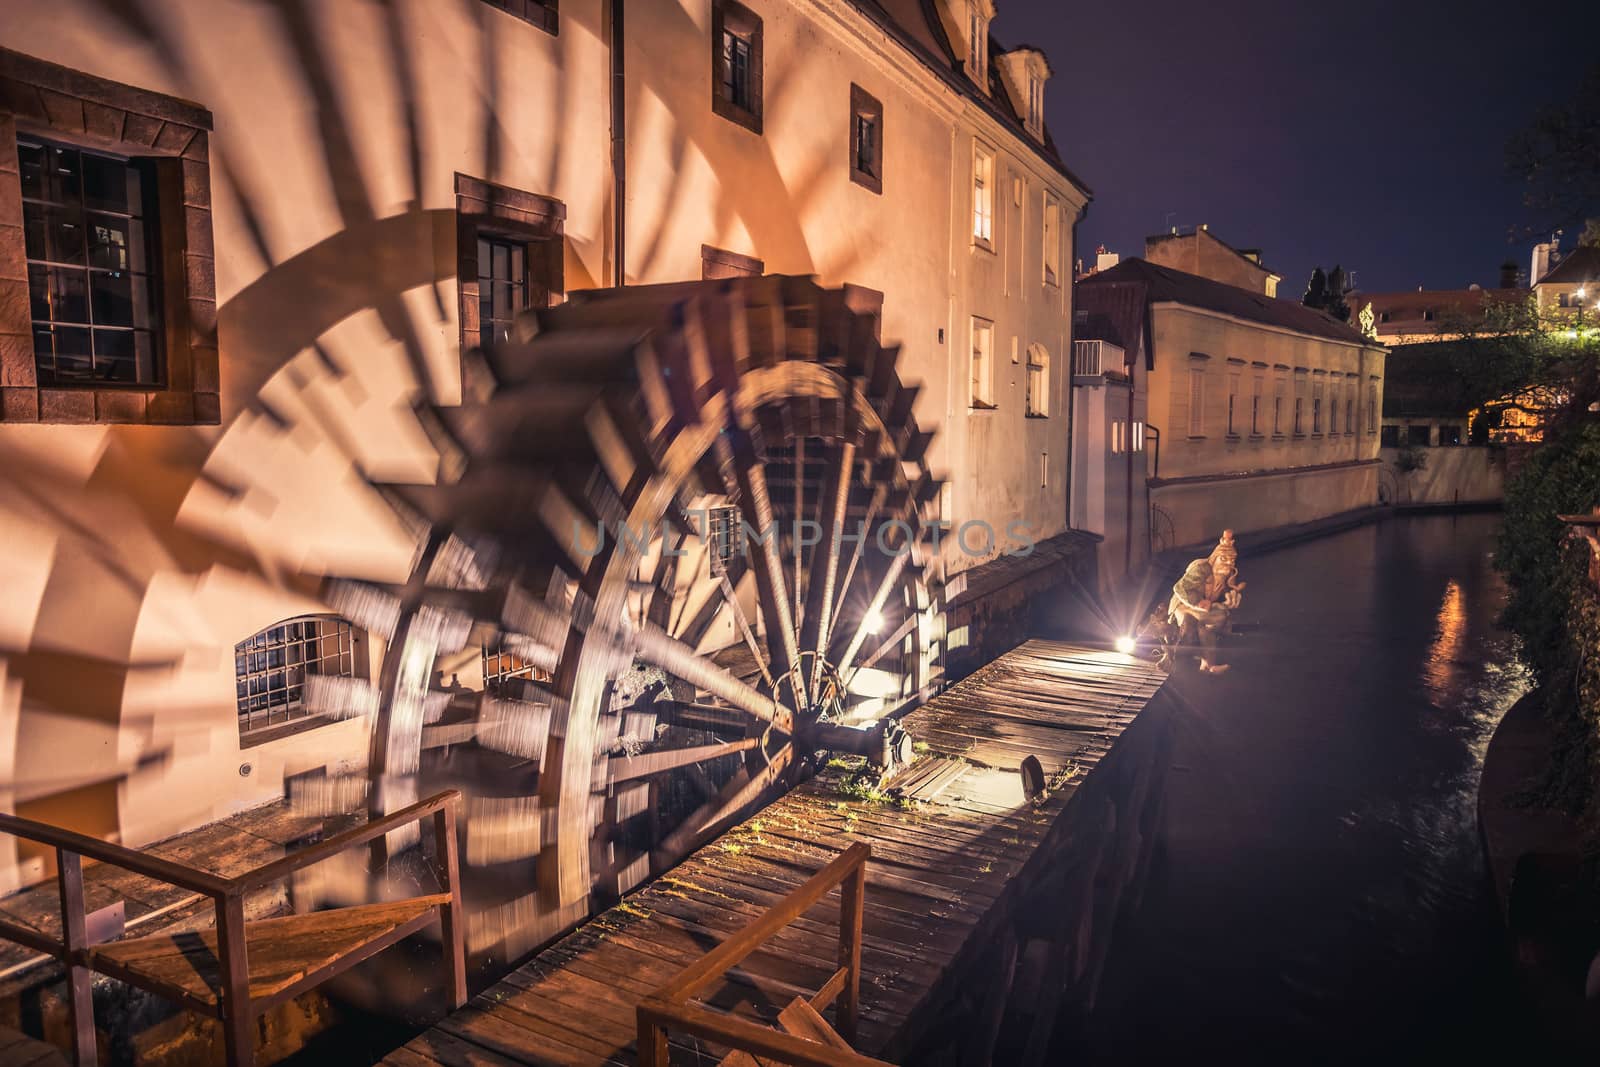 Historic water mill on Kampa Island in Prague, Czech Republic. Branch of the Vltava river, the Certovka or Devil's Stream